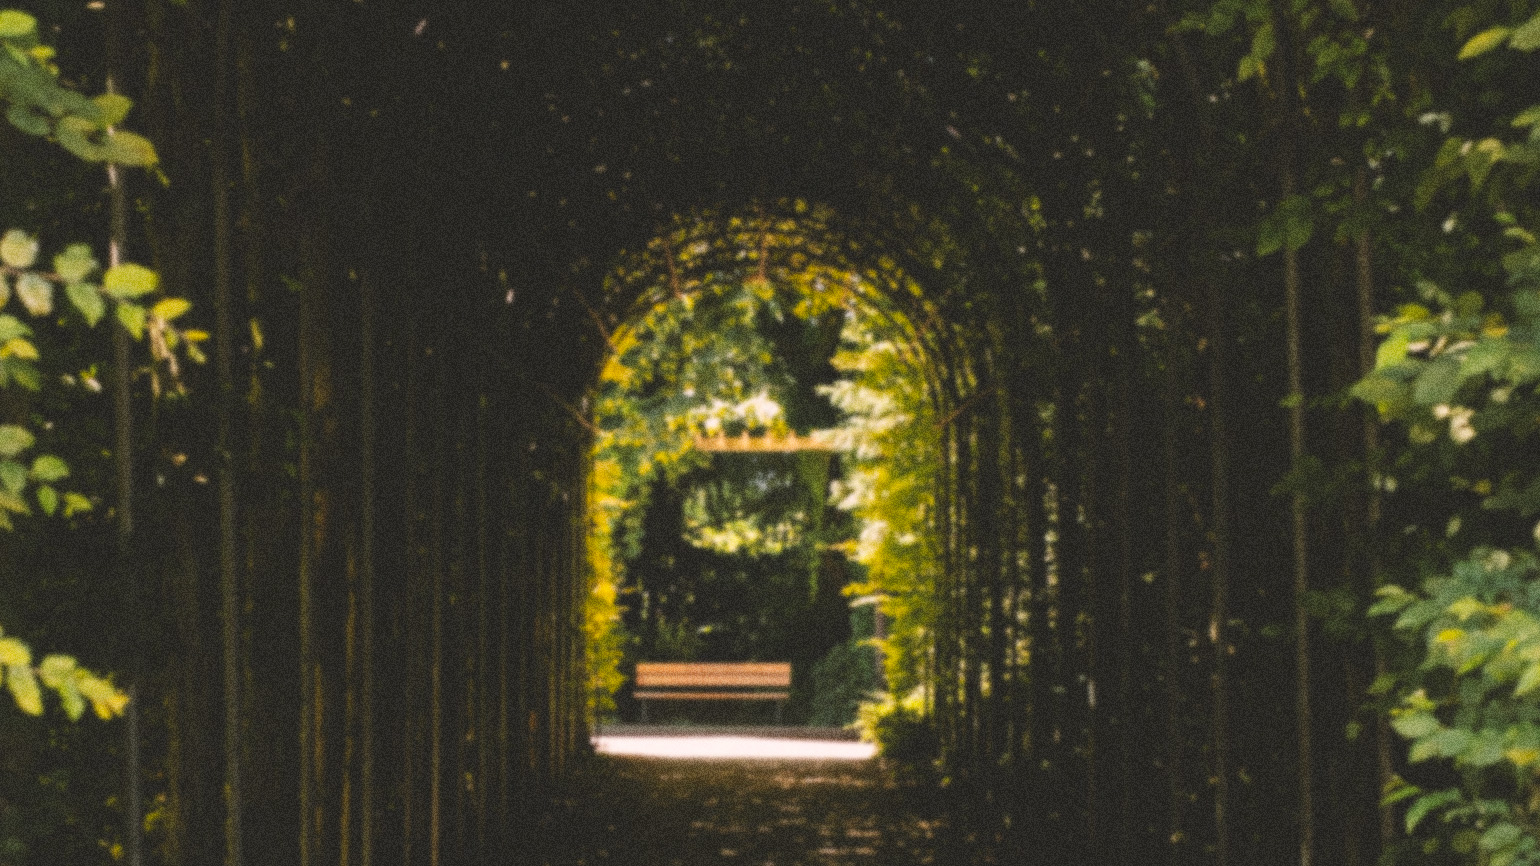 A dark tunnel leading toward a purpose in life